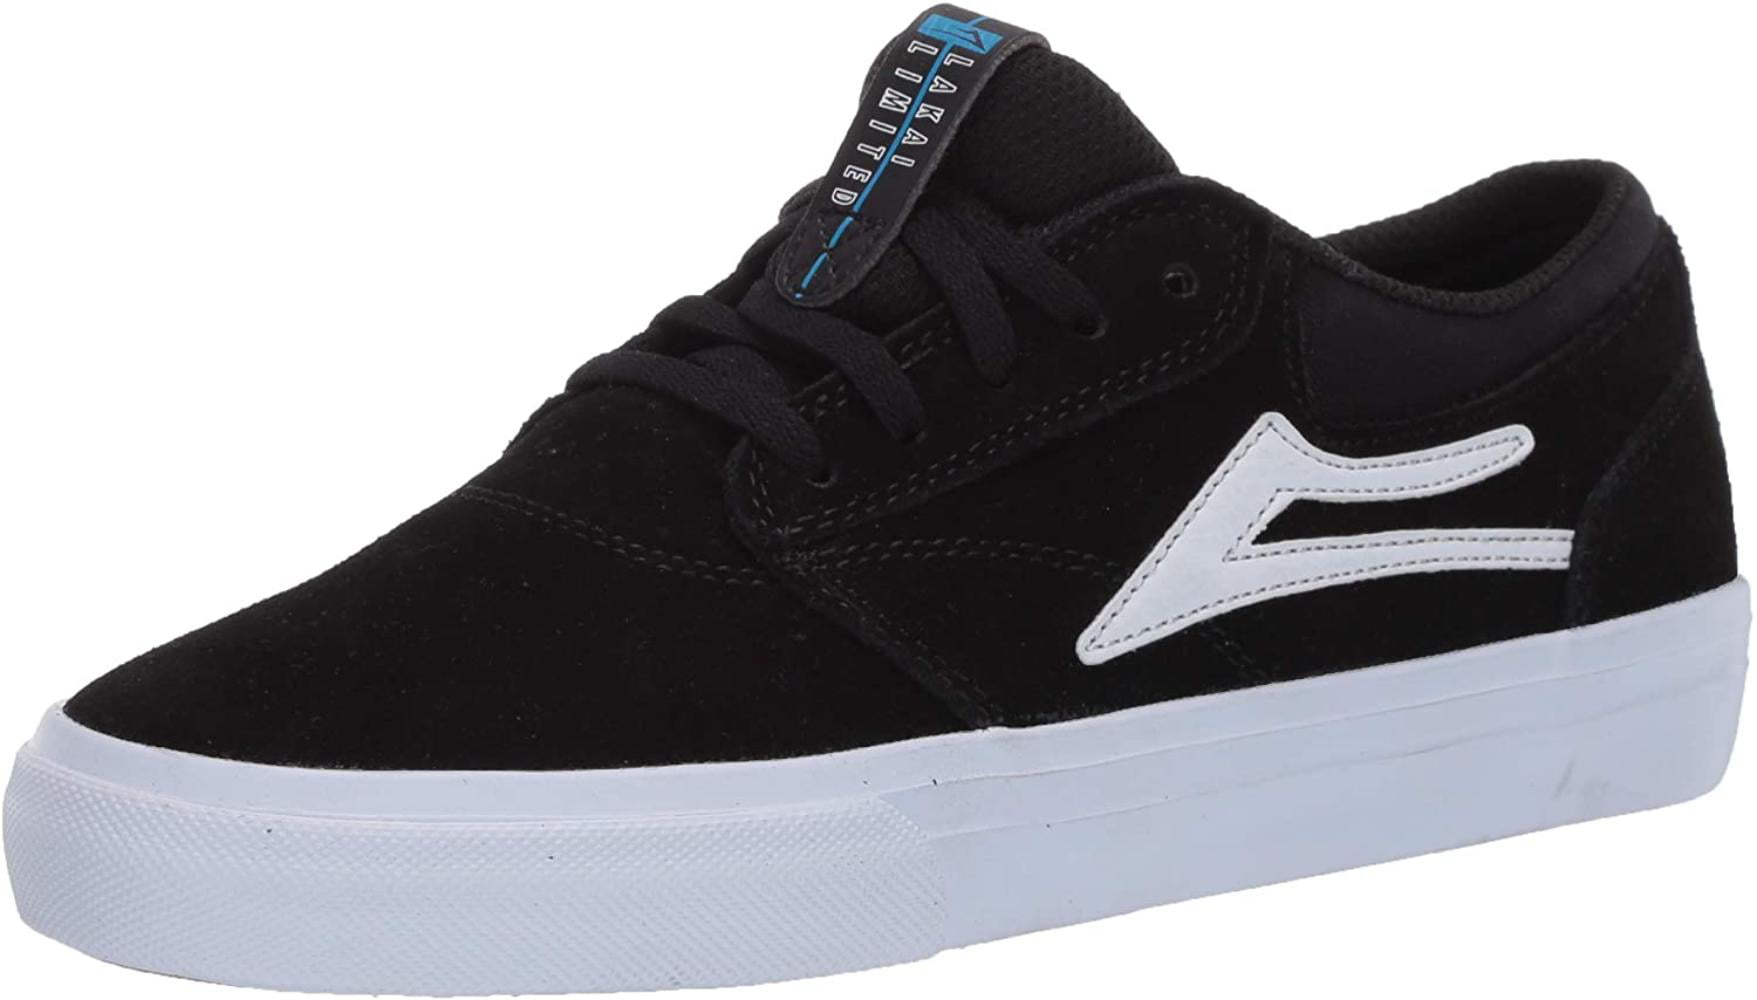 Lakai Footwear Griffin Black Textile Men's Sneakers Trainers Skate shoes 